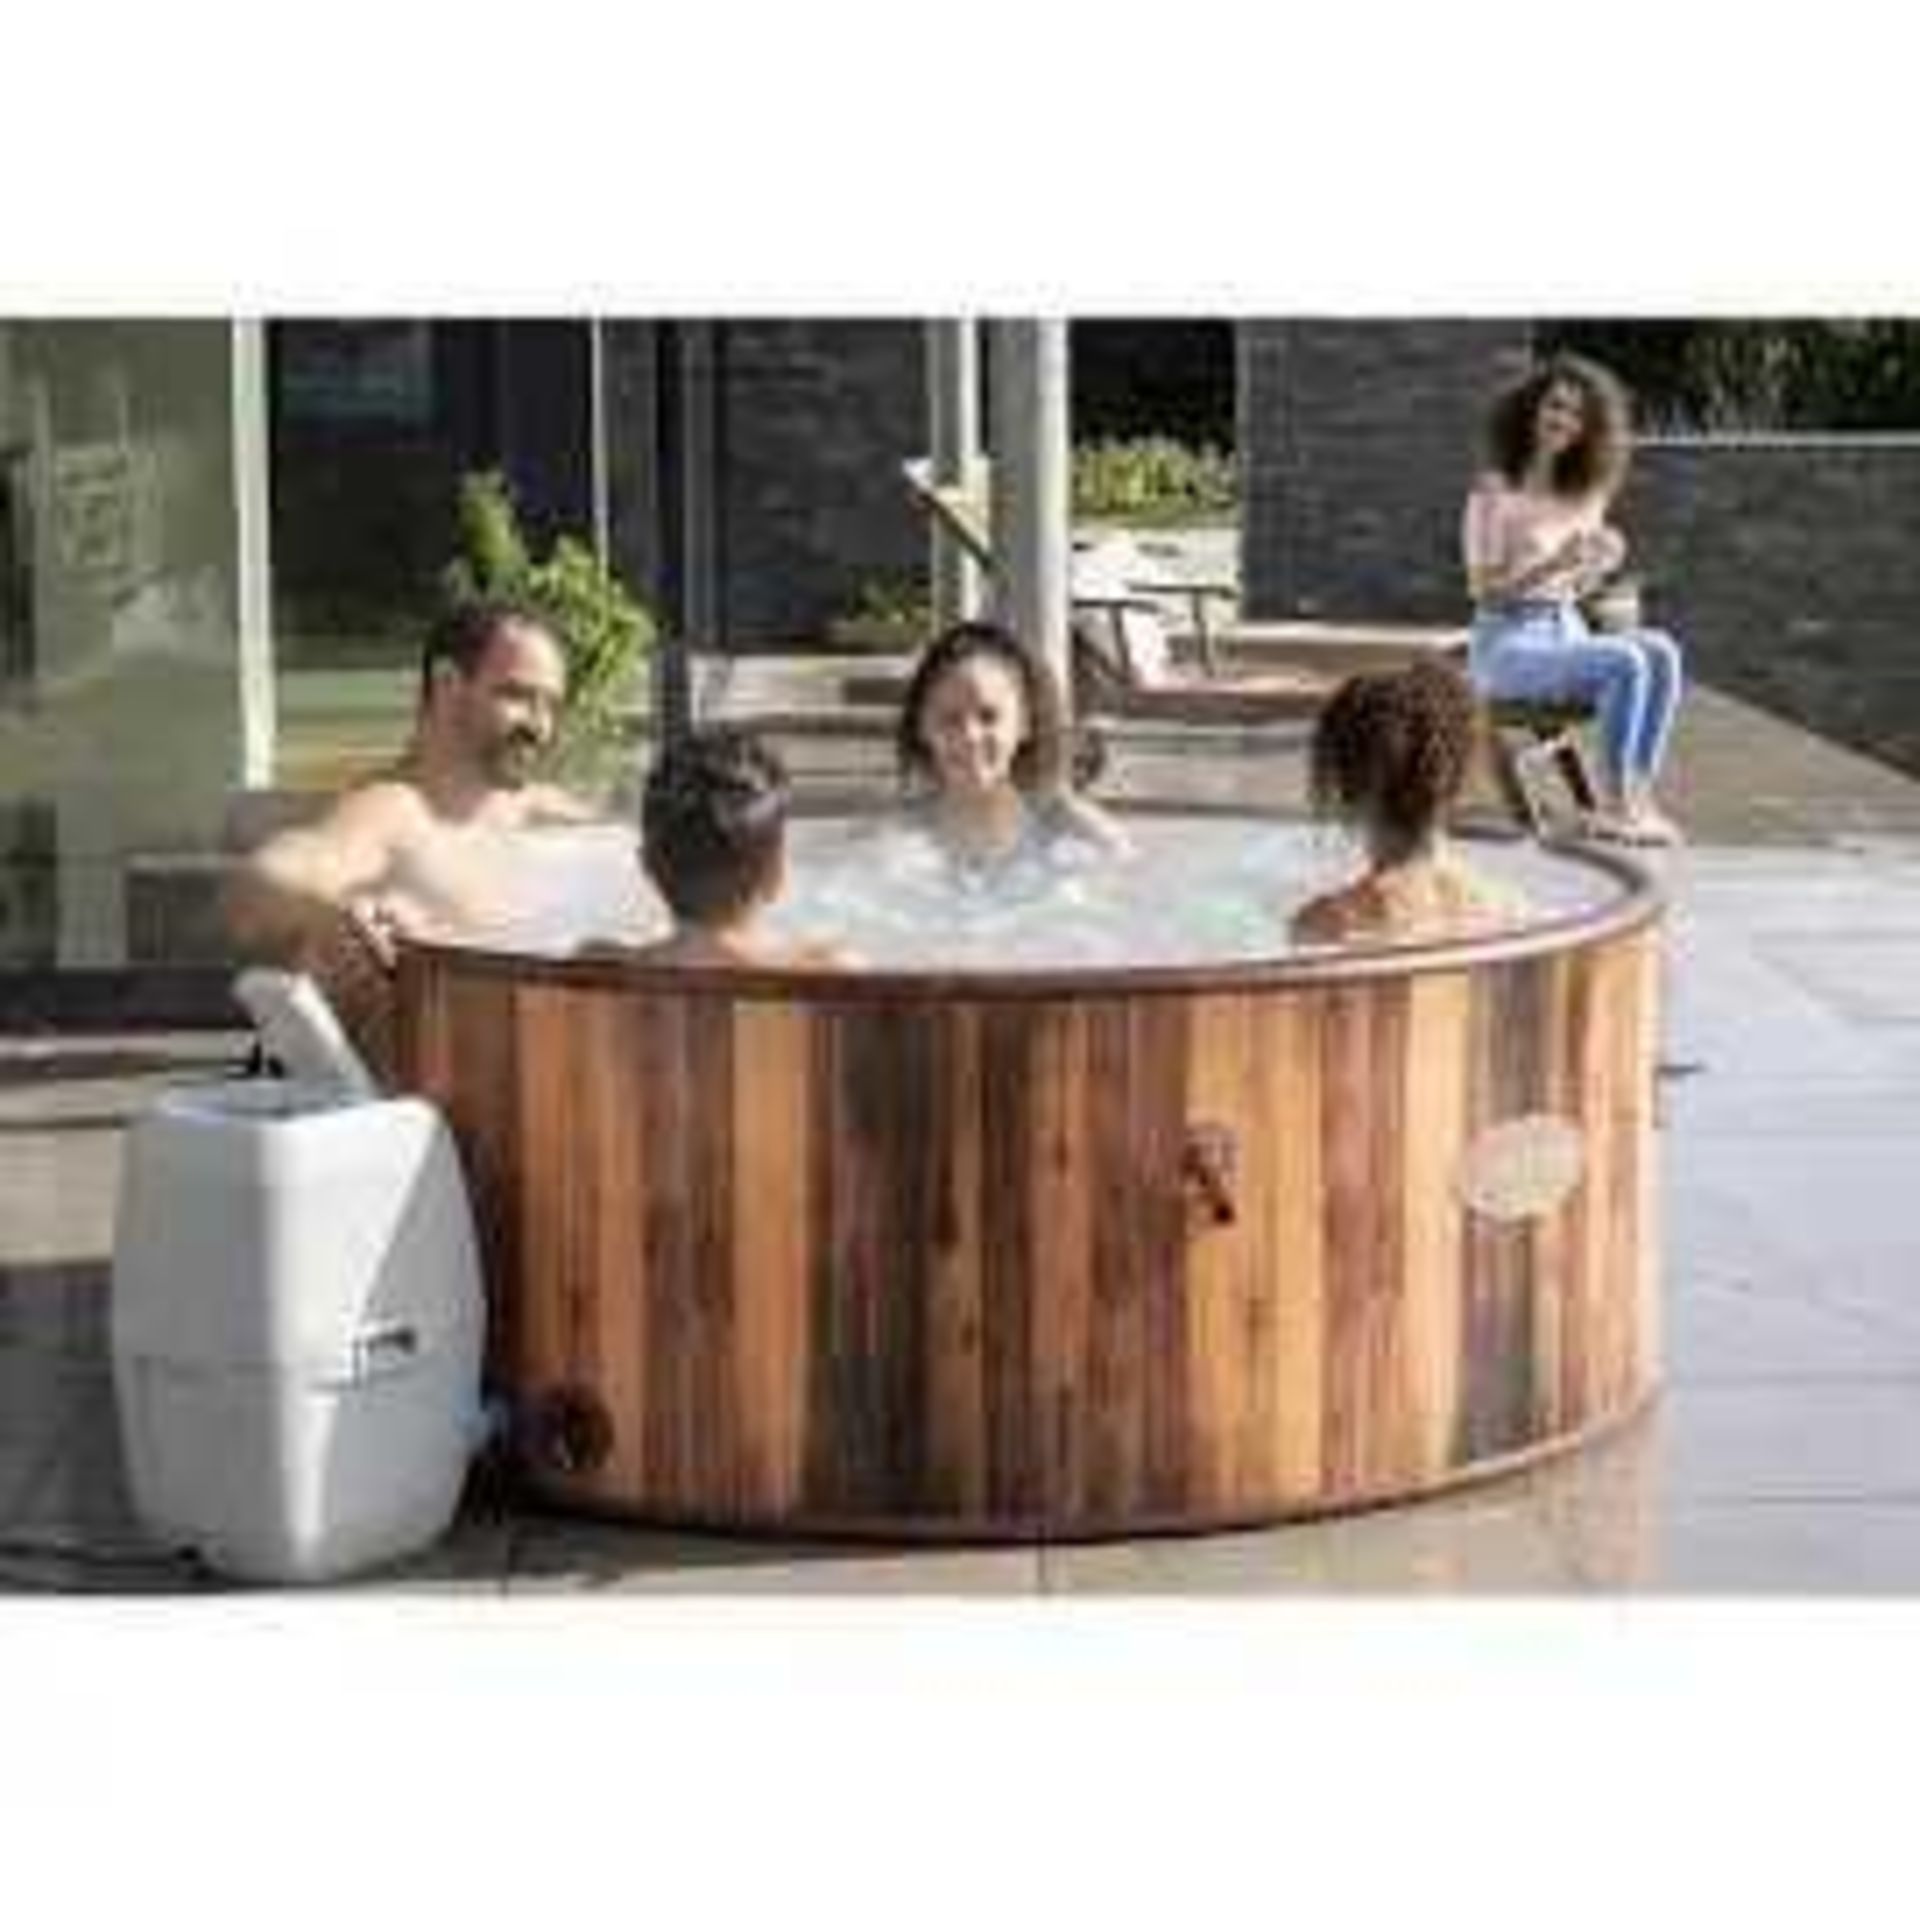 RRP £600 A Lazy-Spa Helsinki Hot Tub